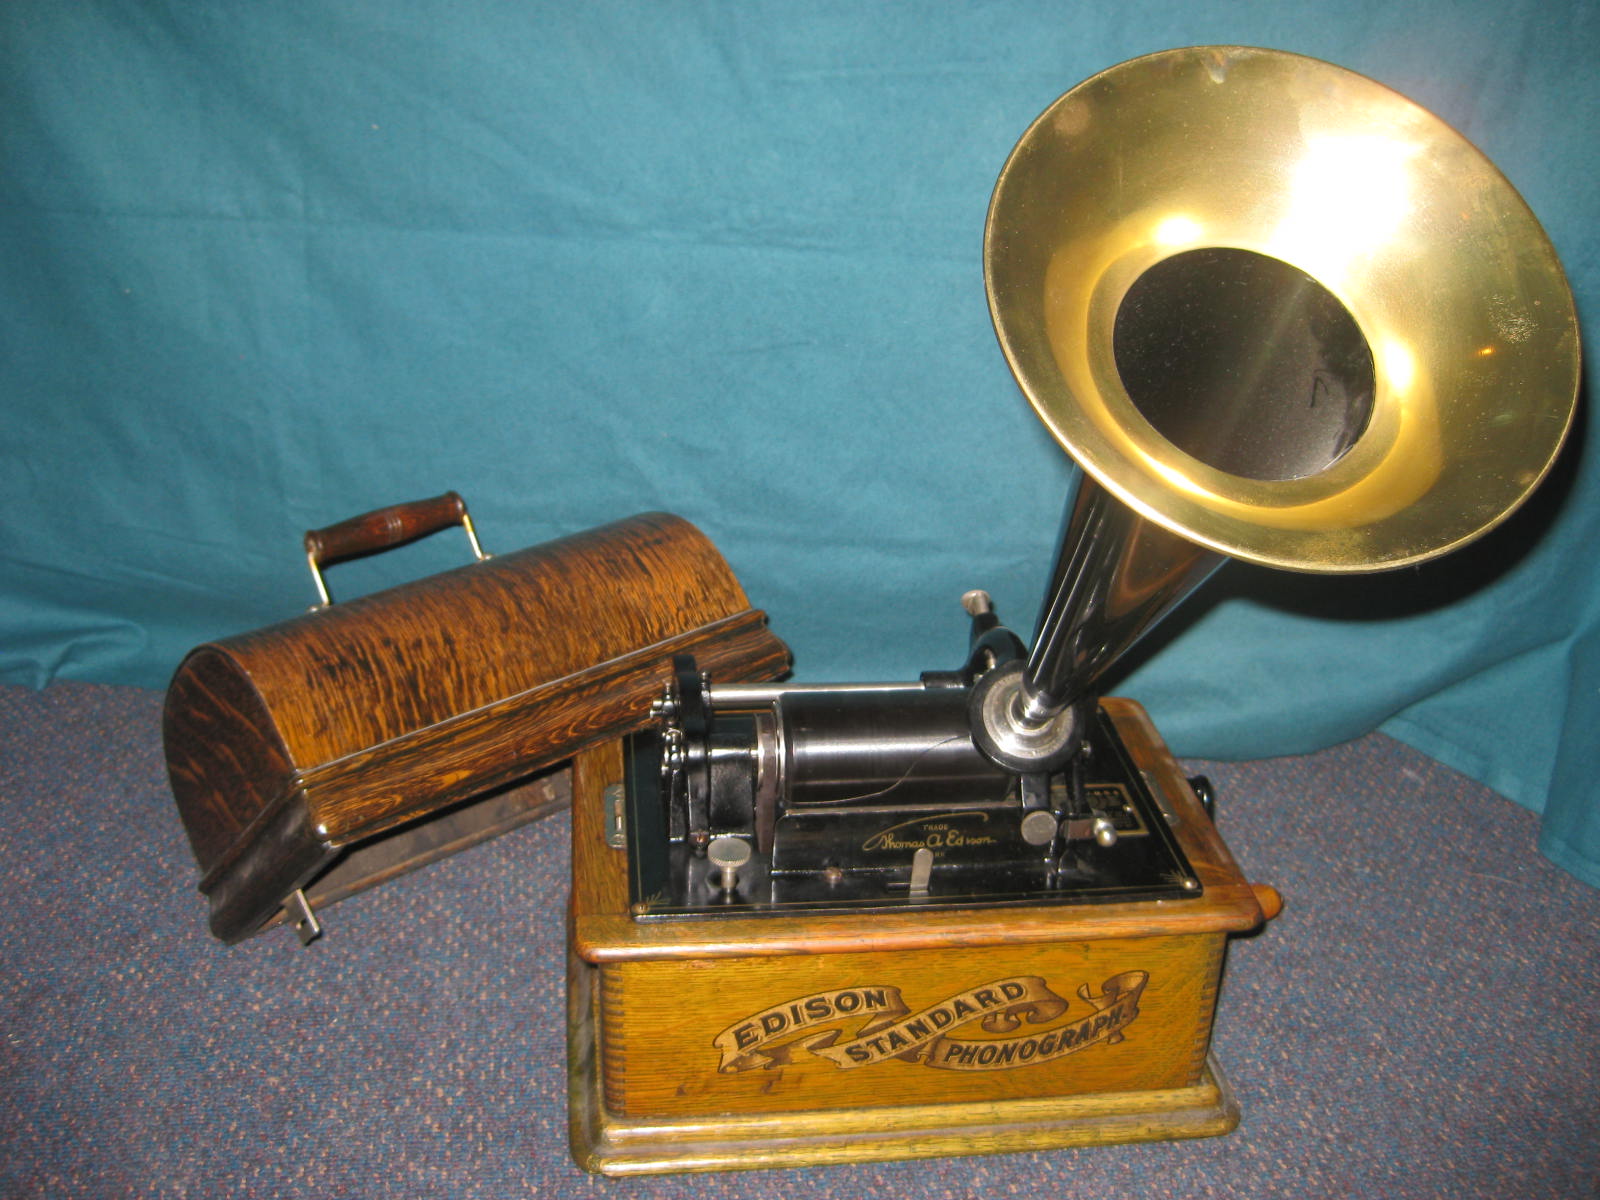 tinhte-cd-25-years-phonograph.jpg